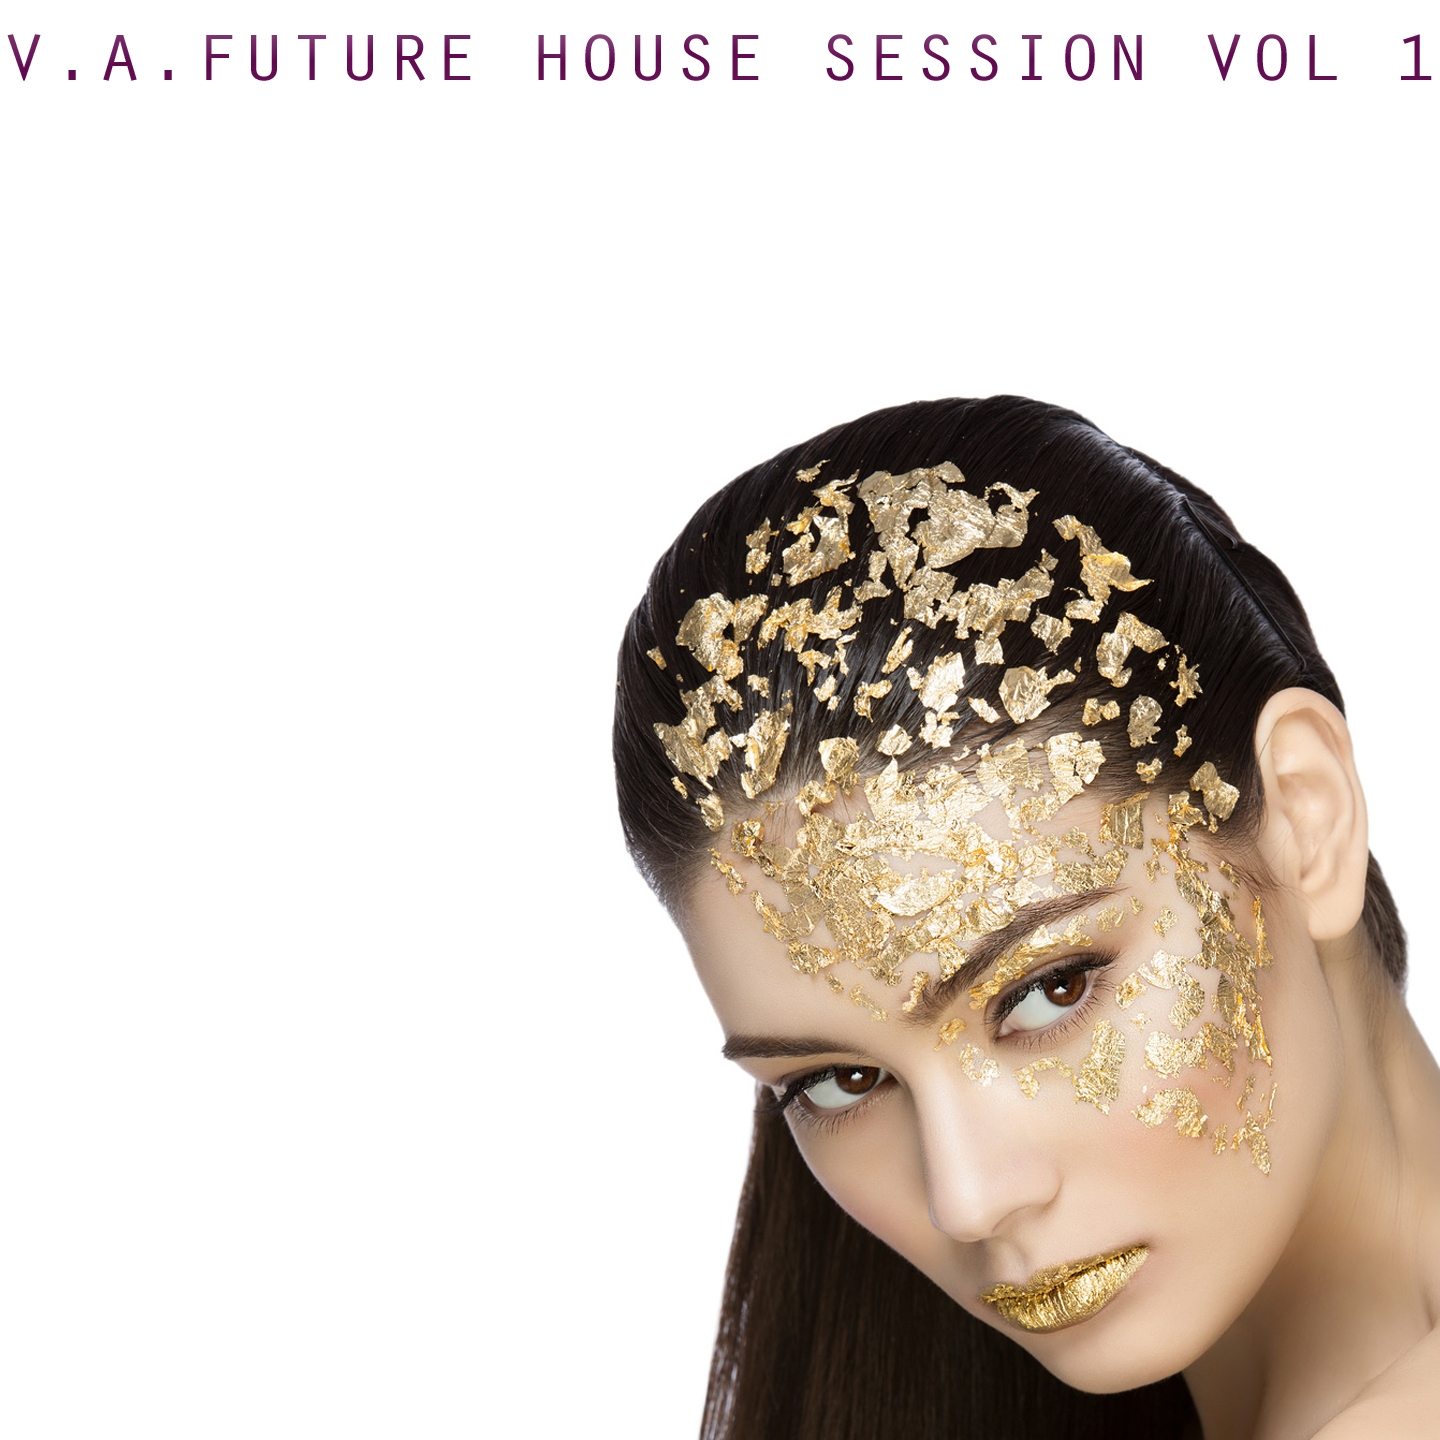 V.A. Future House Session, Vol. 1